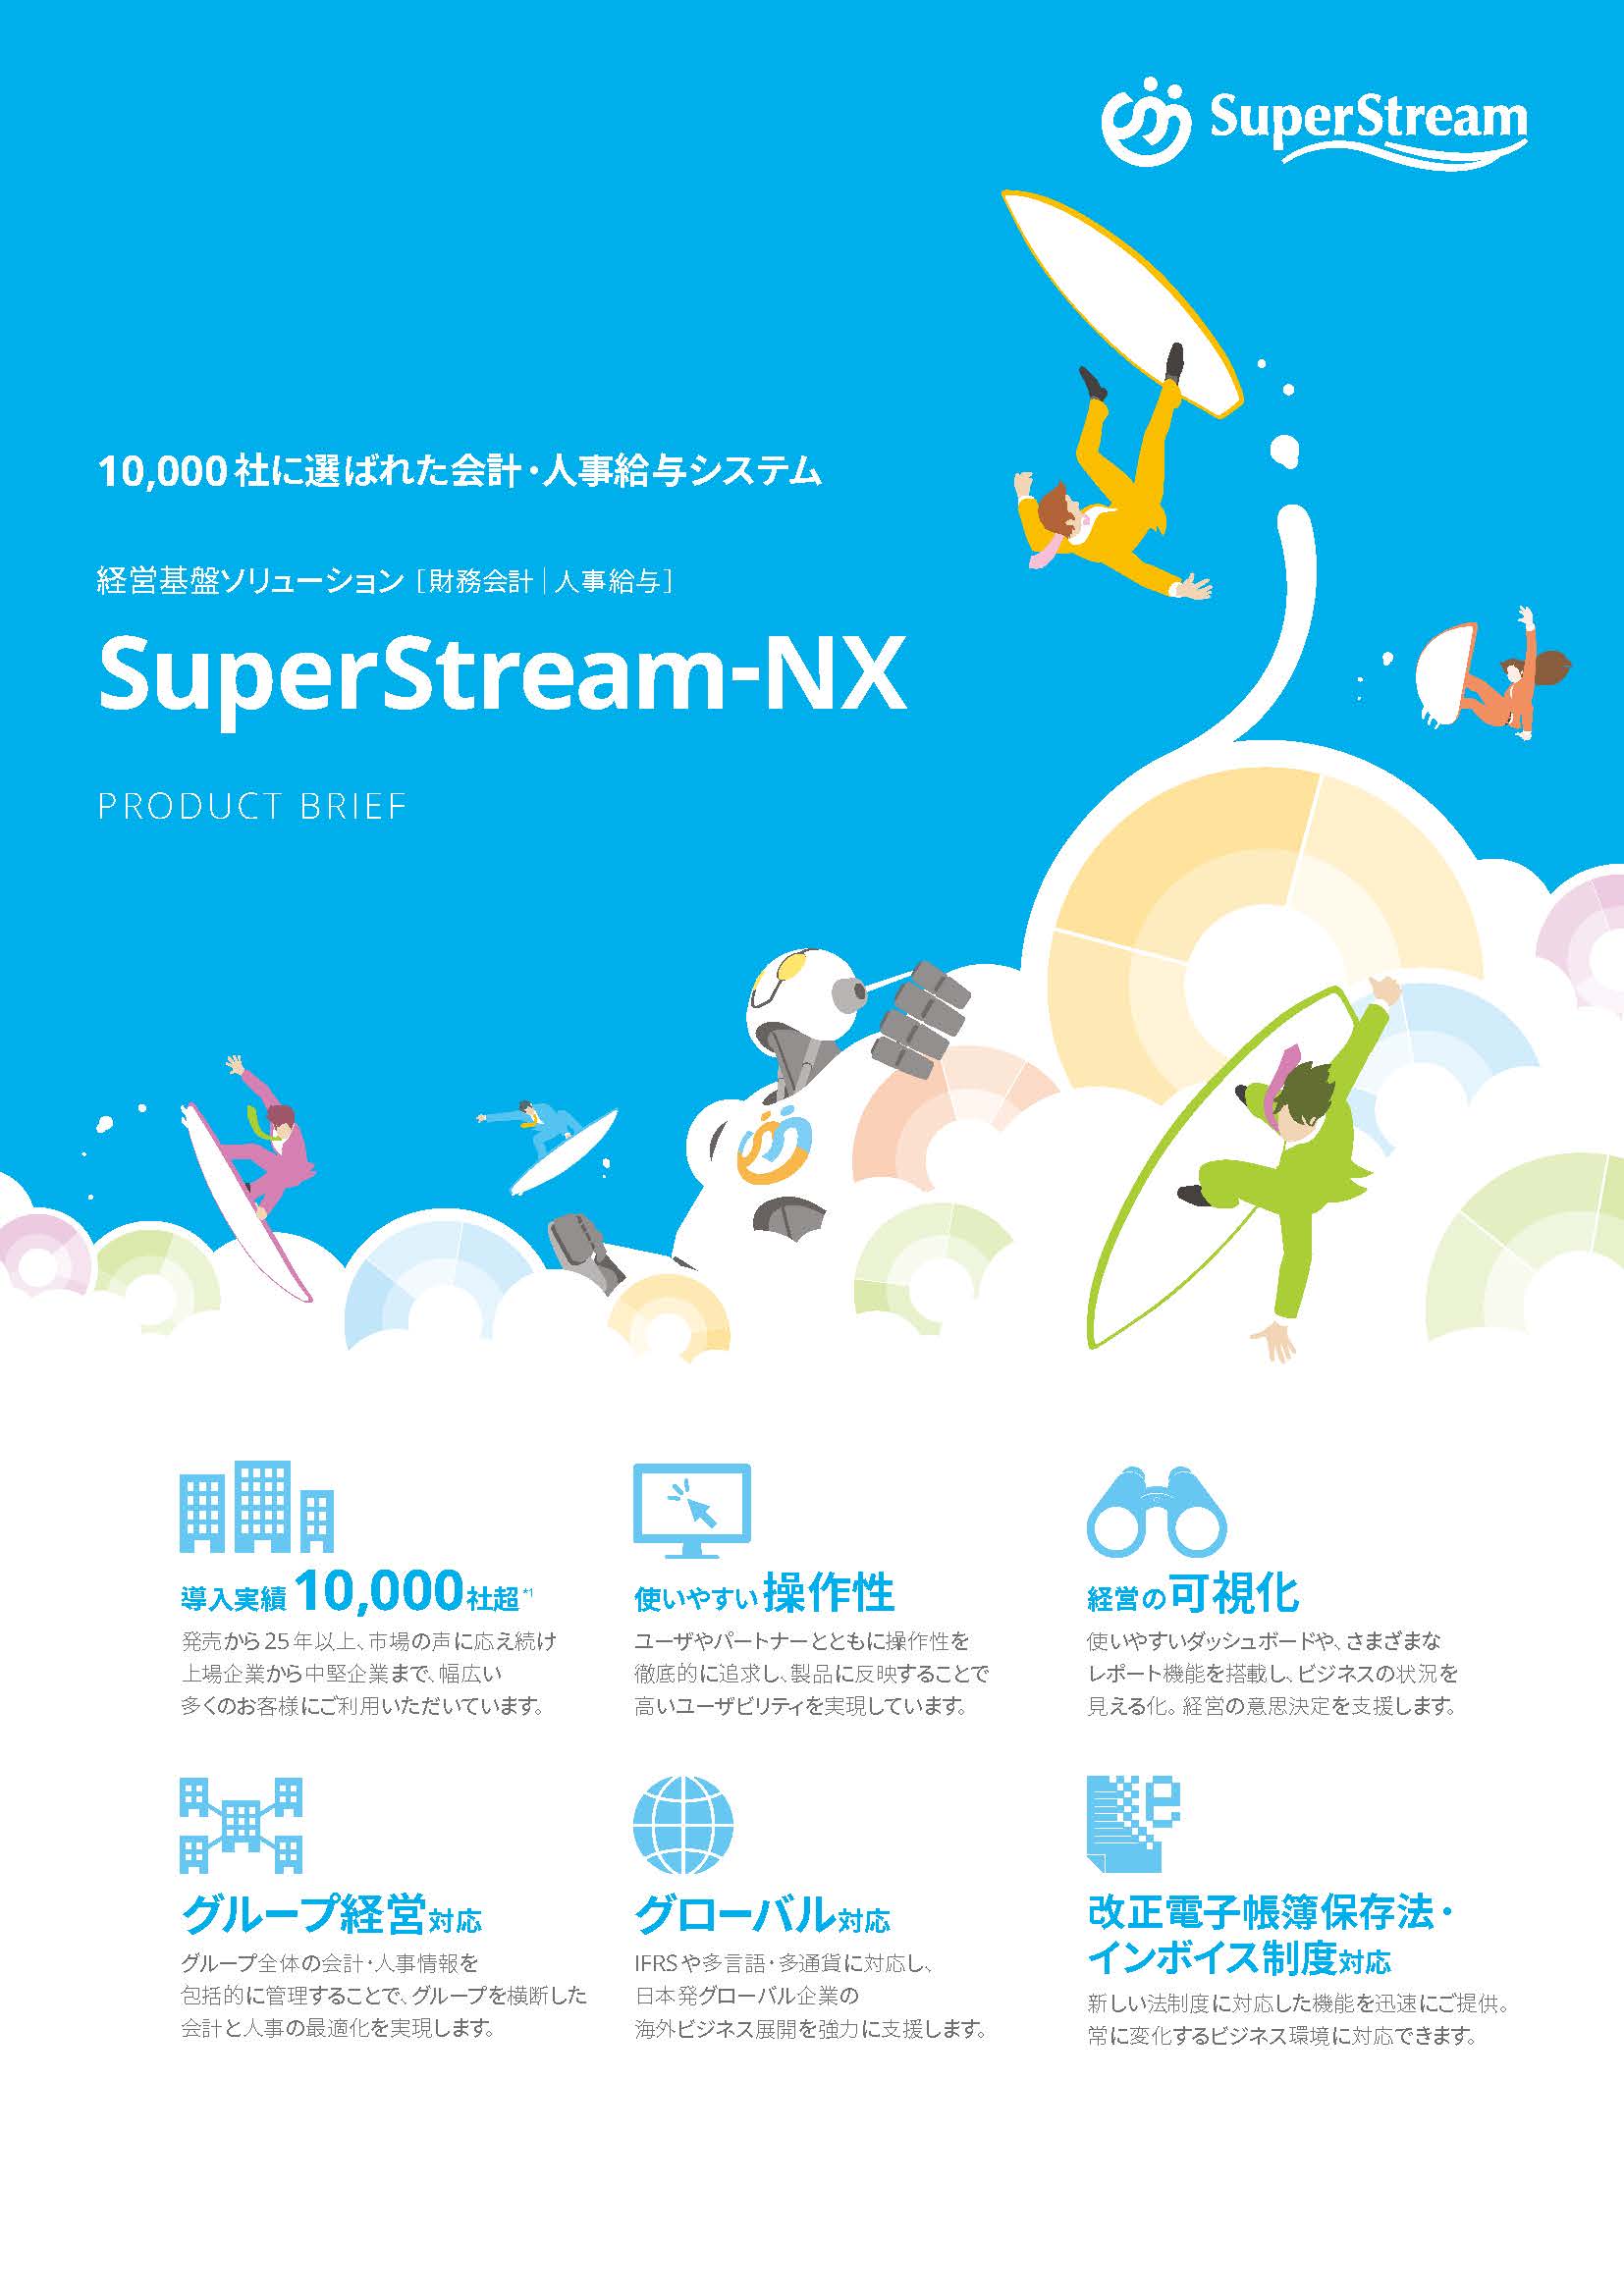 SuperStream-NX PRODUCT BRIEF